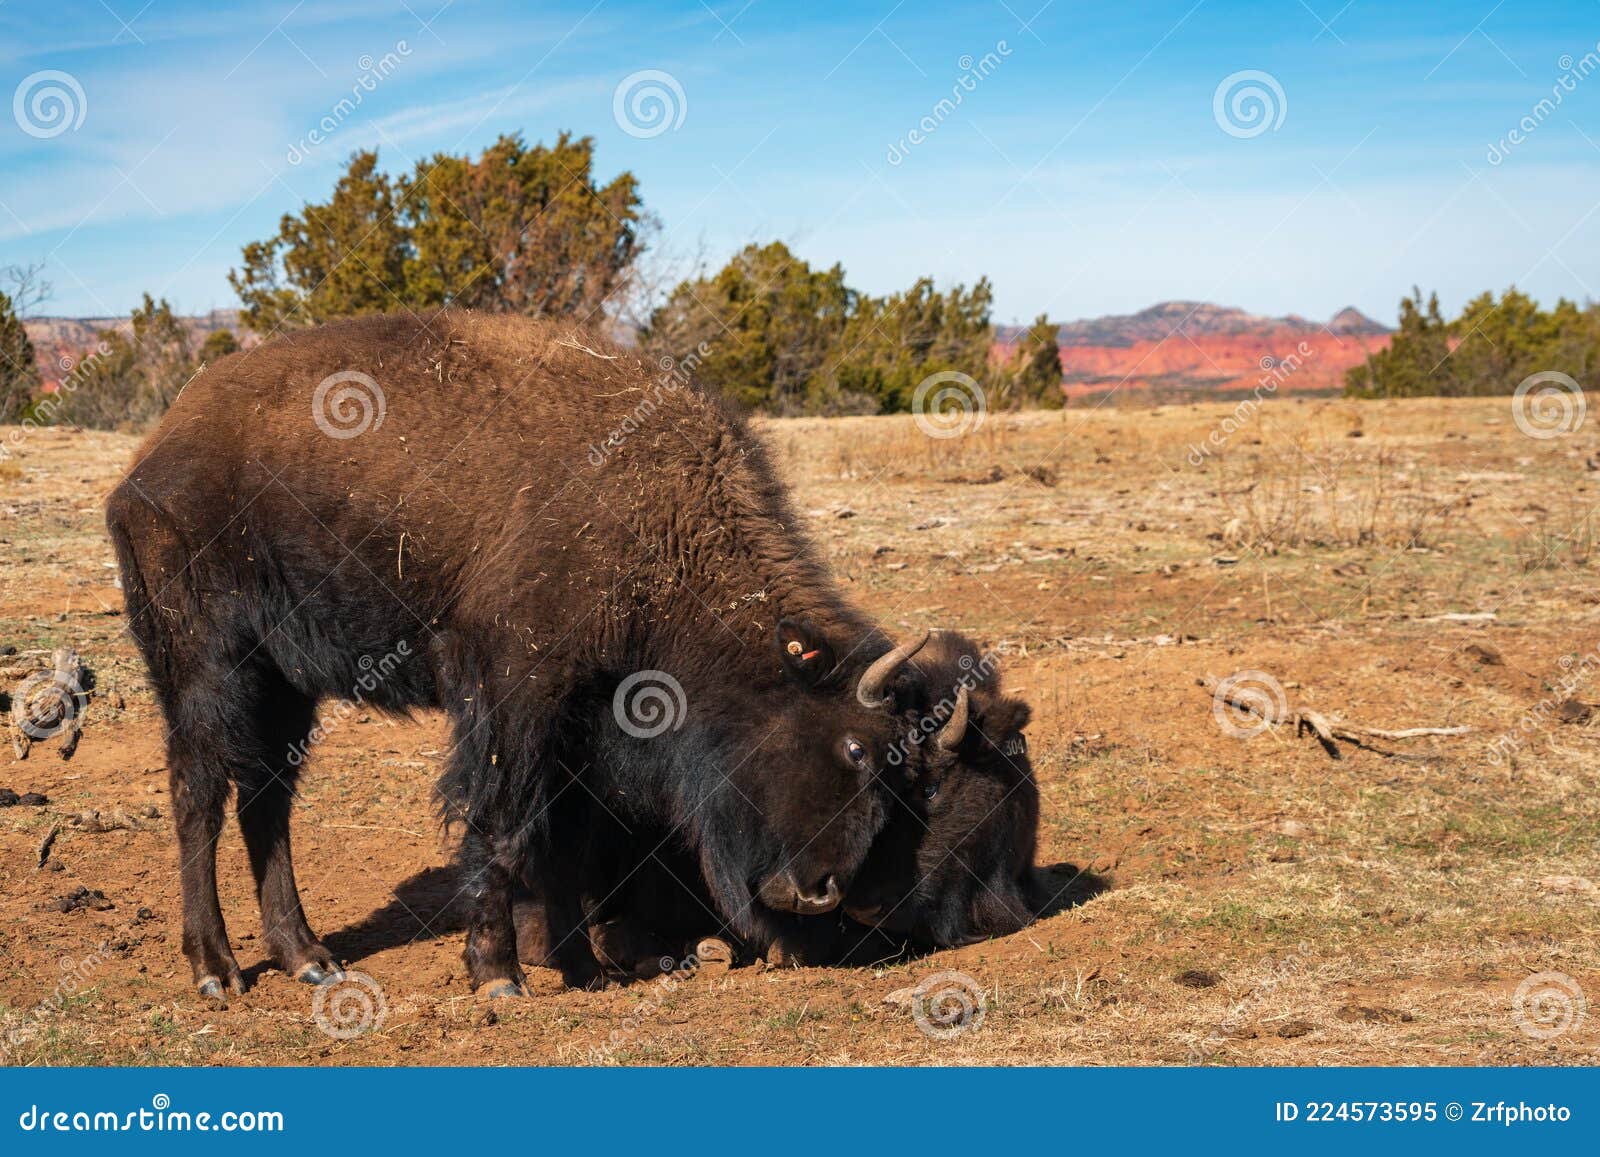 a buffalo at caprock canyons state park, texas